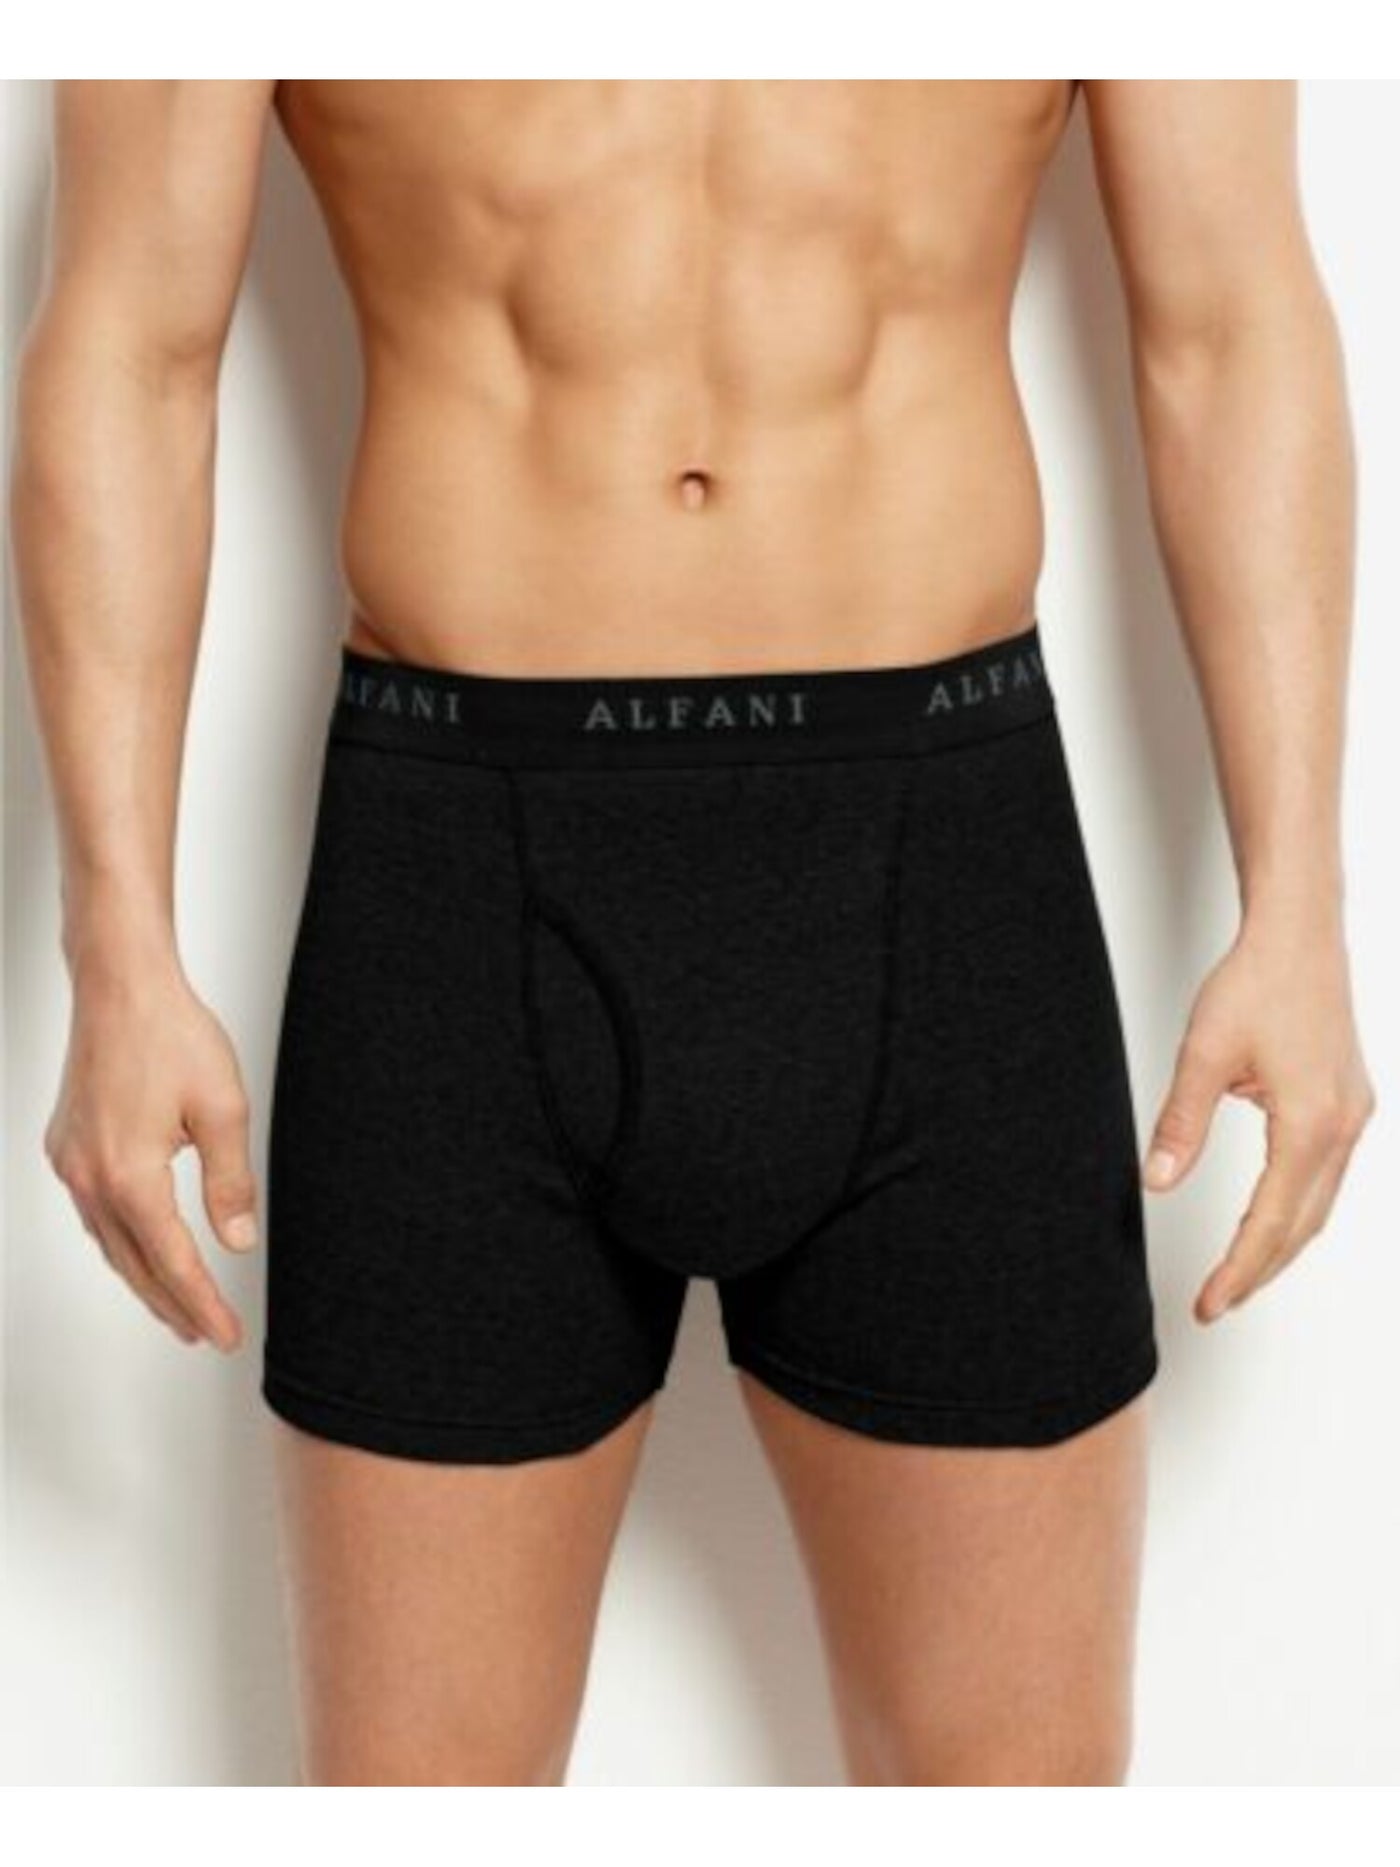 ALFANI Intimates Black Boxer Brief Underwear S